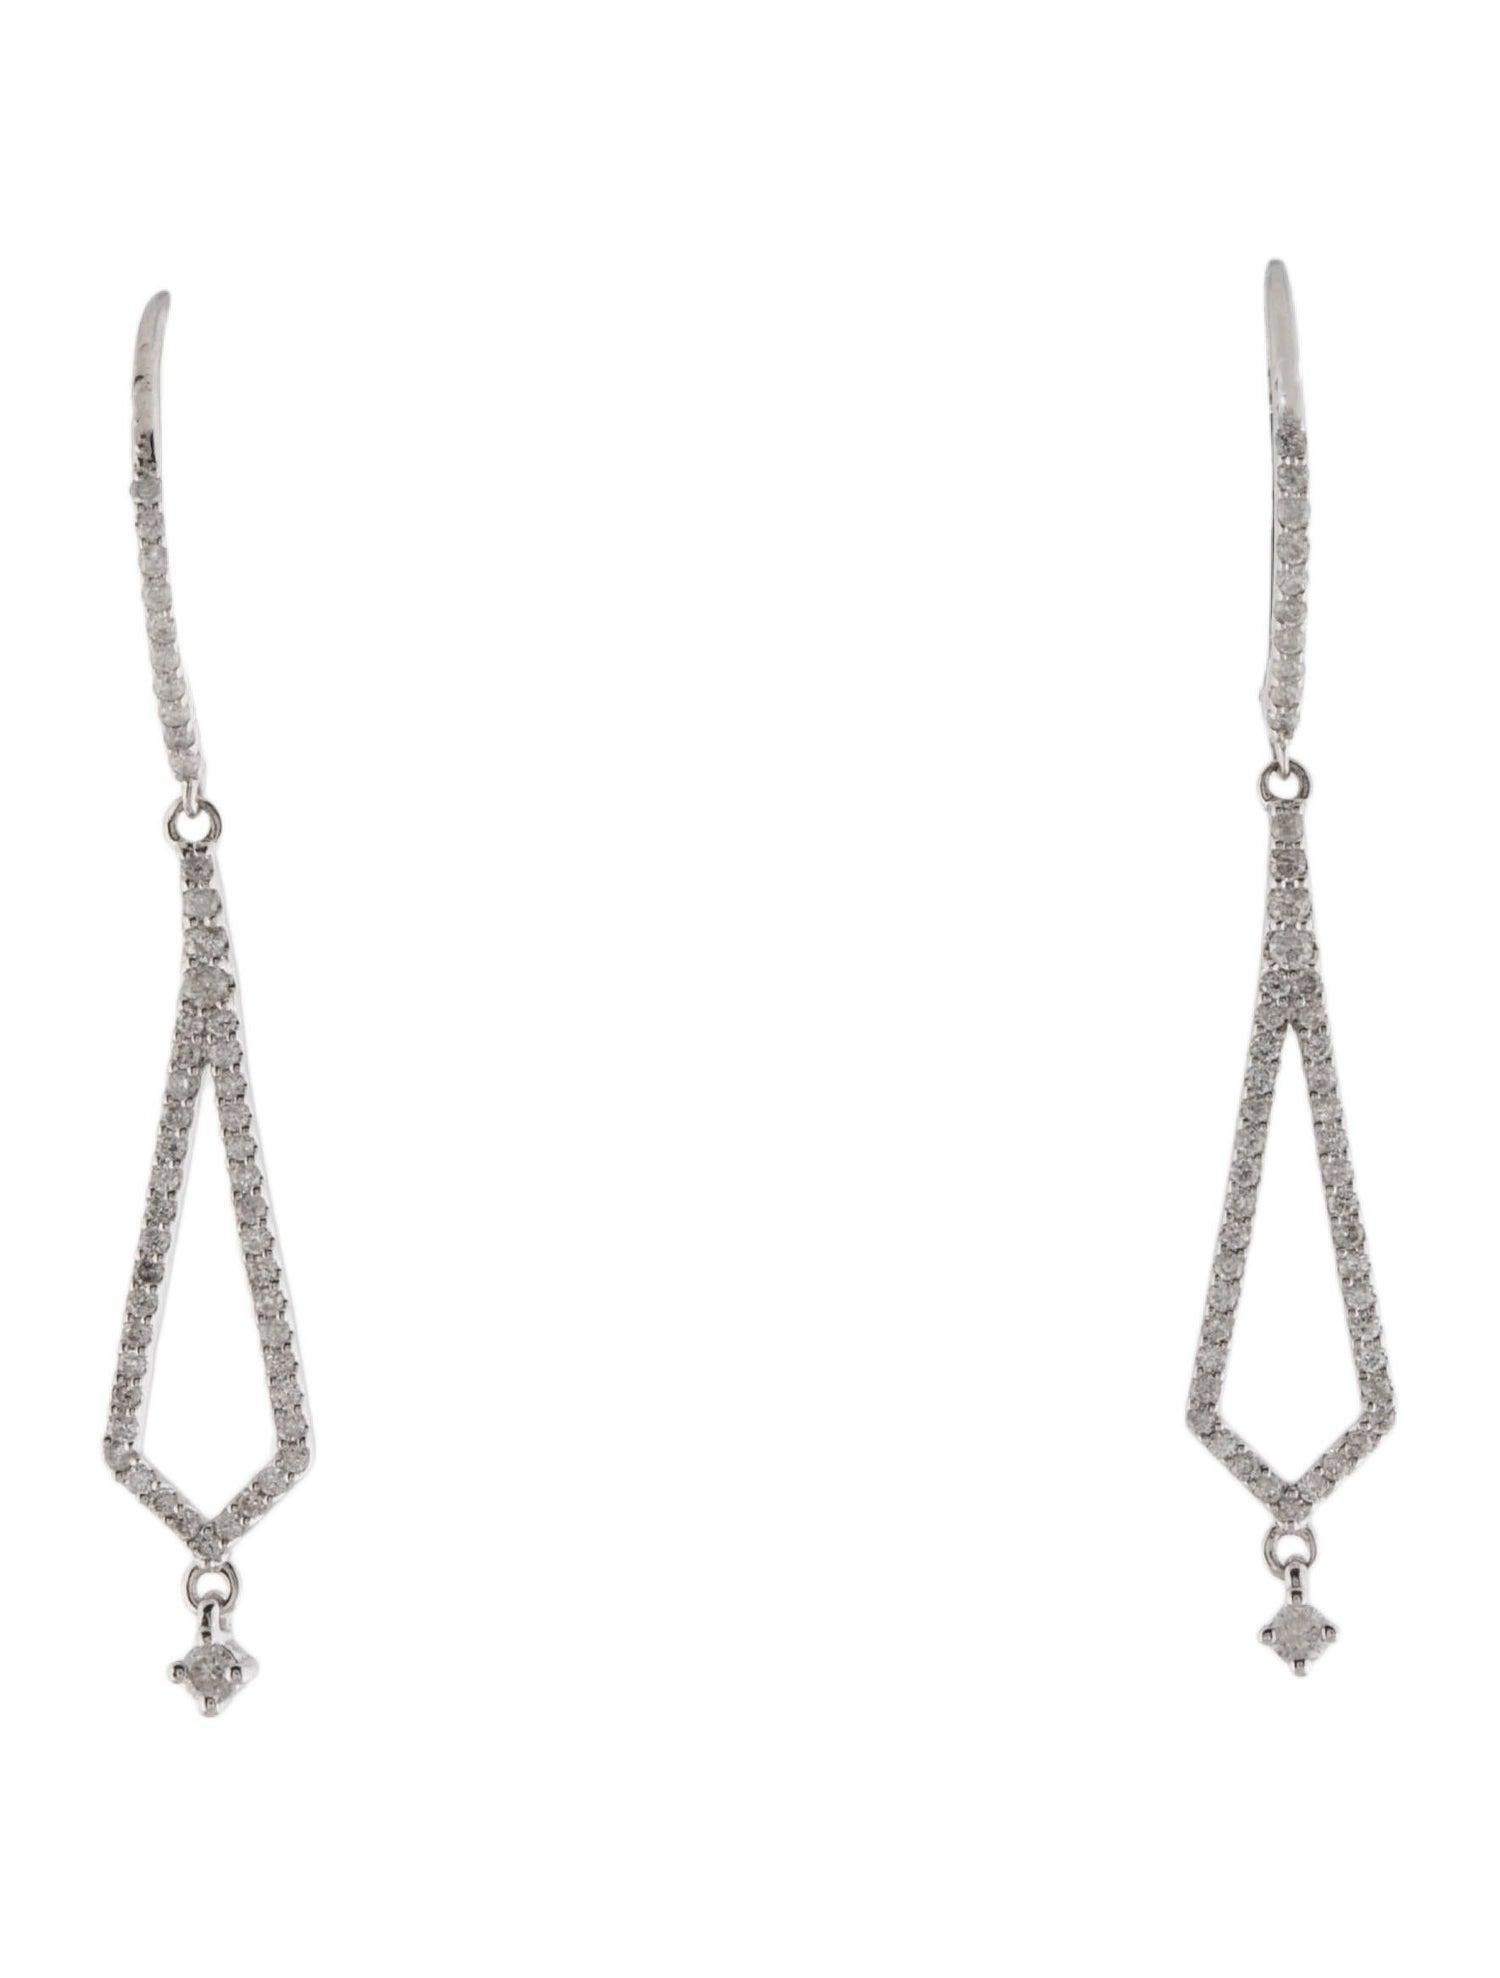 Brilliant Cut 14K Diamond Drop Earrings - Exquisite Sparkle, Timeless Elegance, Elegant Design For Sale